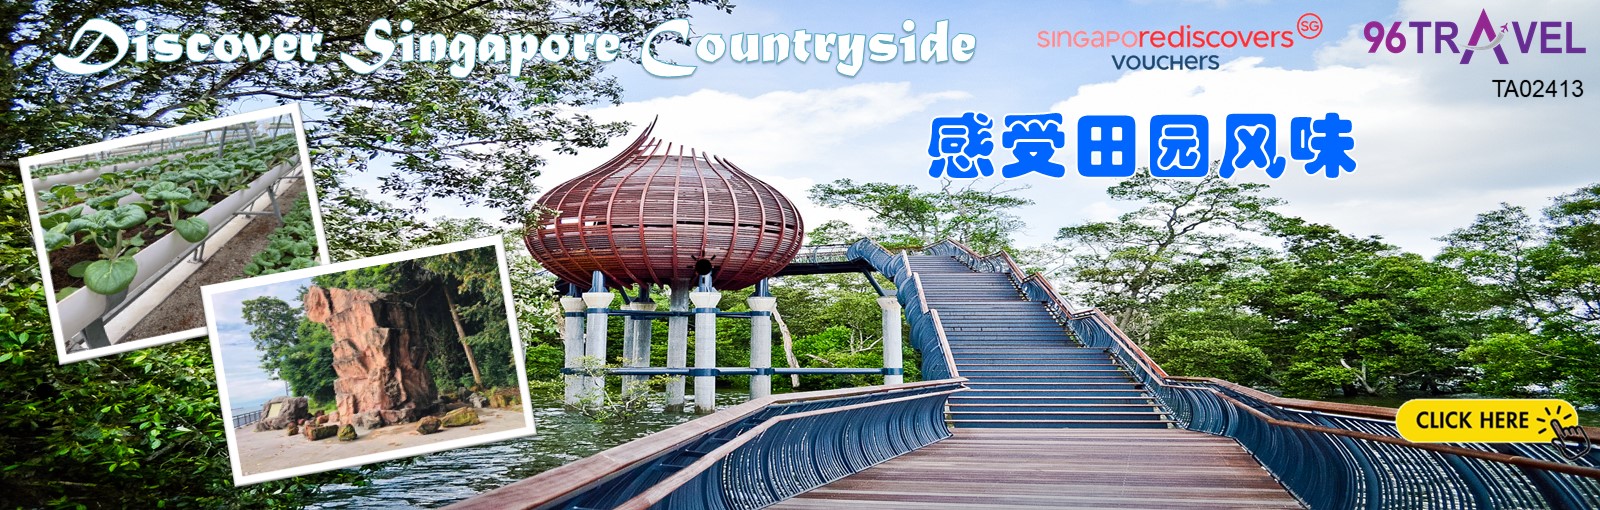 https://www.klook.com/en-SG/activity/52994-discover-singapore-countryside-tour/